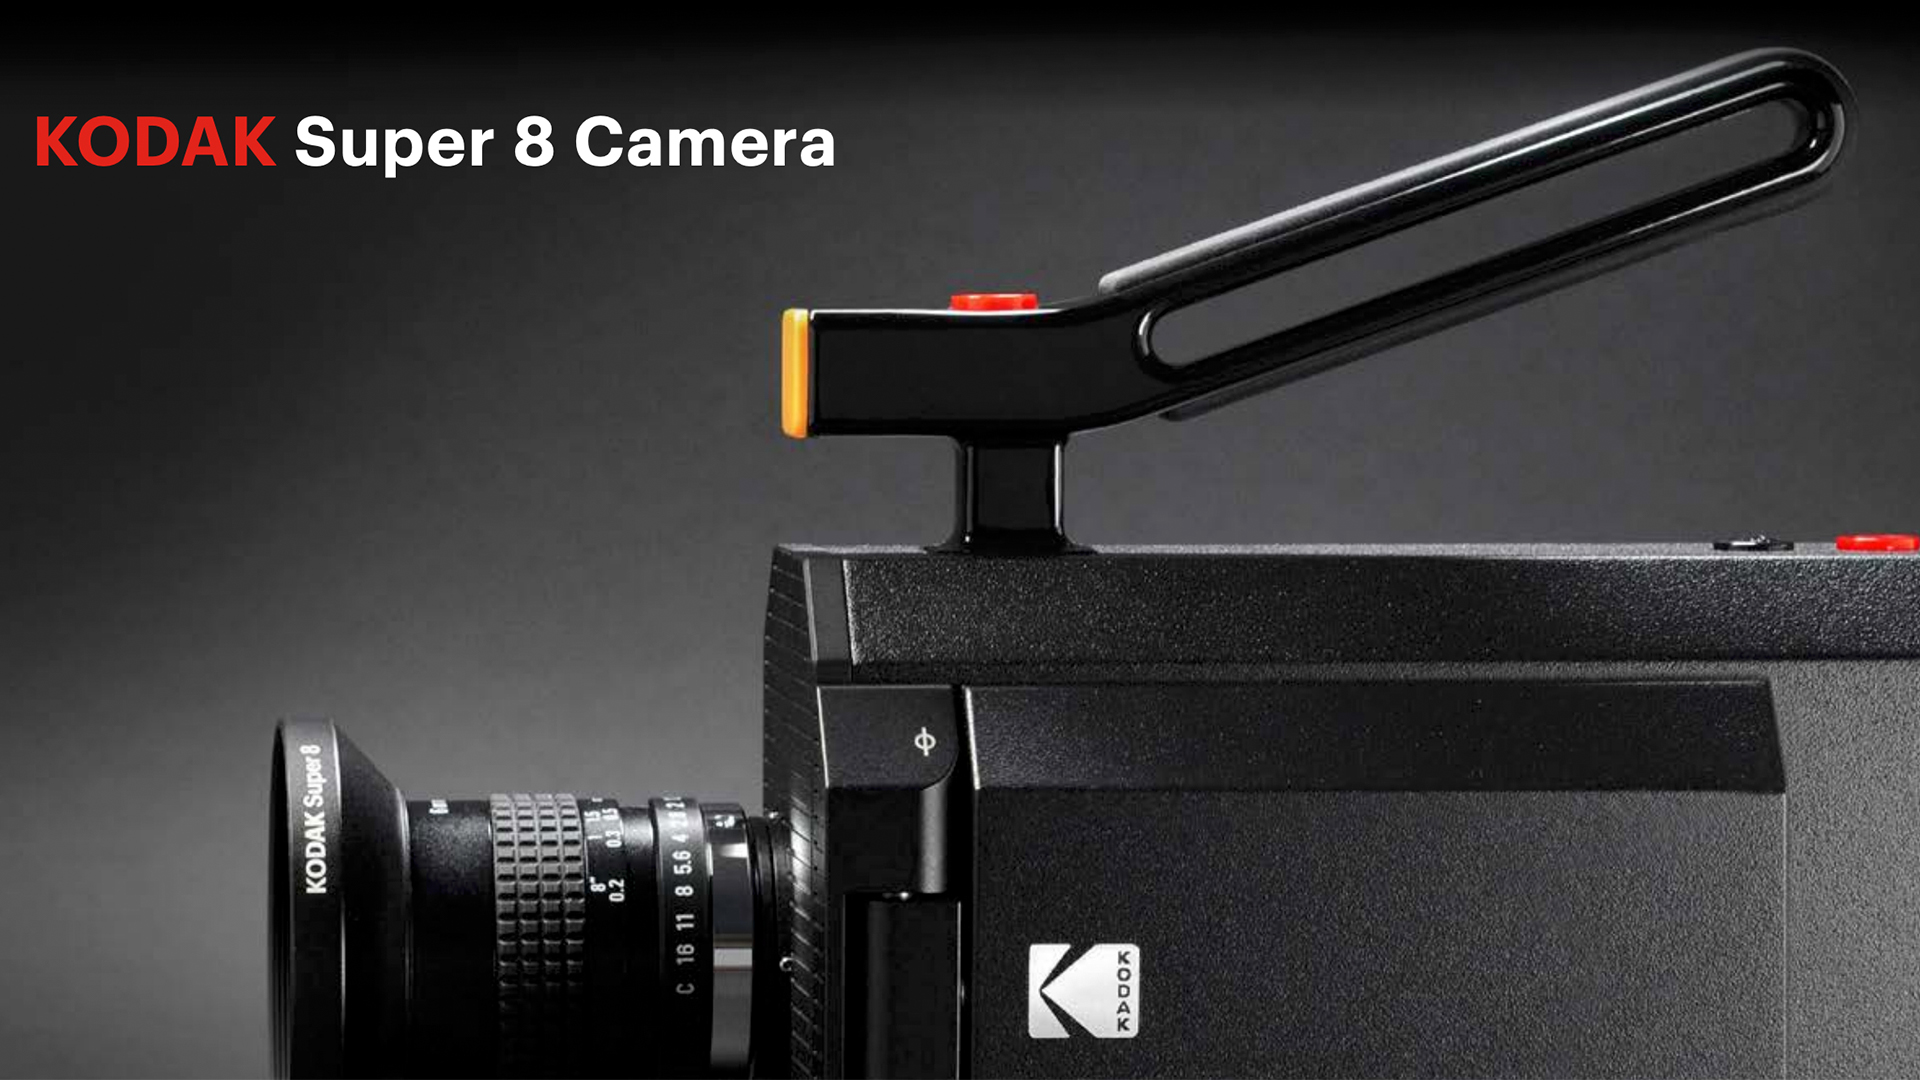 Kodak releases Super 8 film camera with digital features